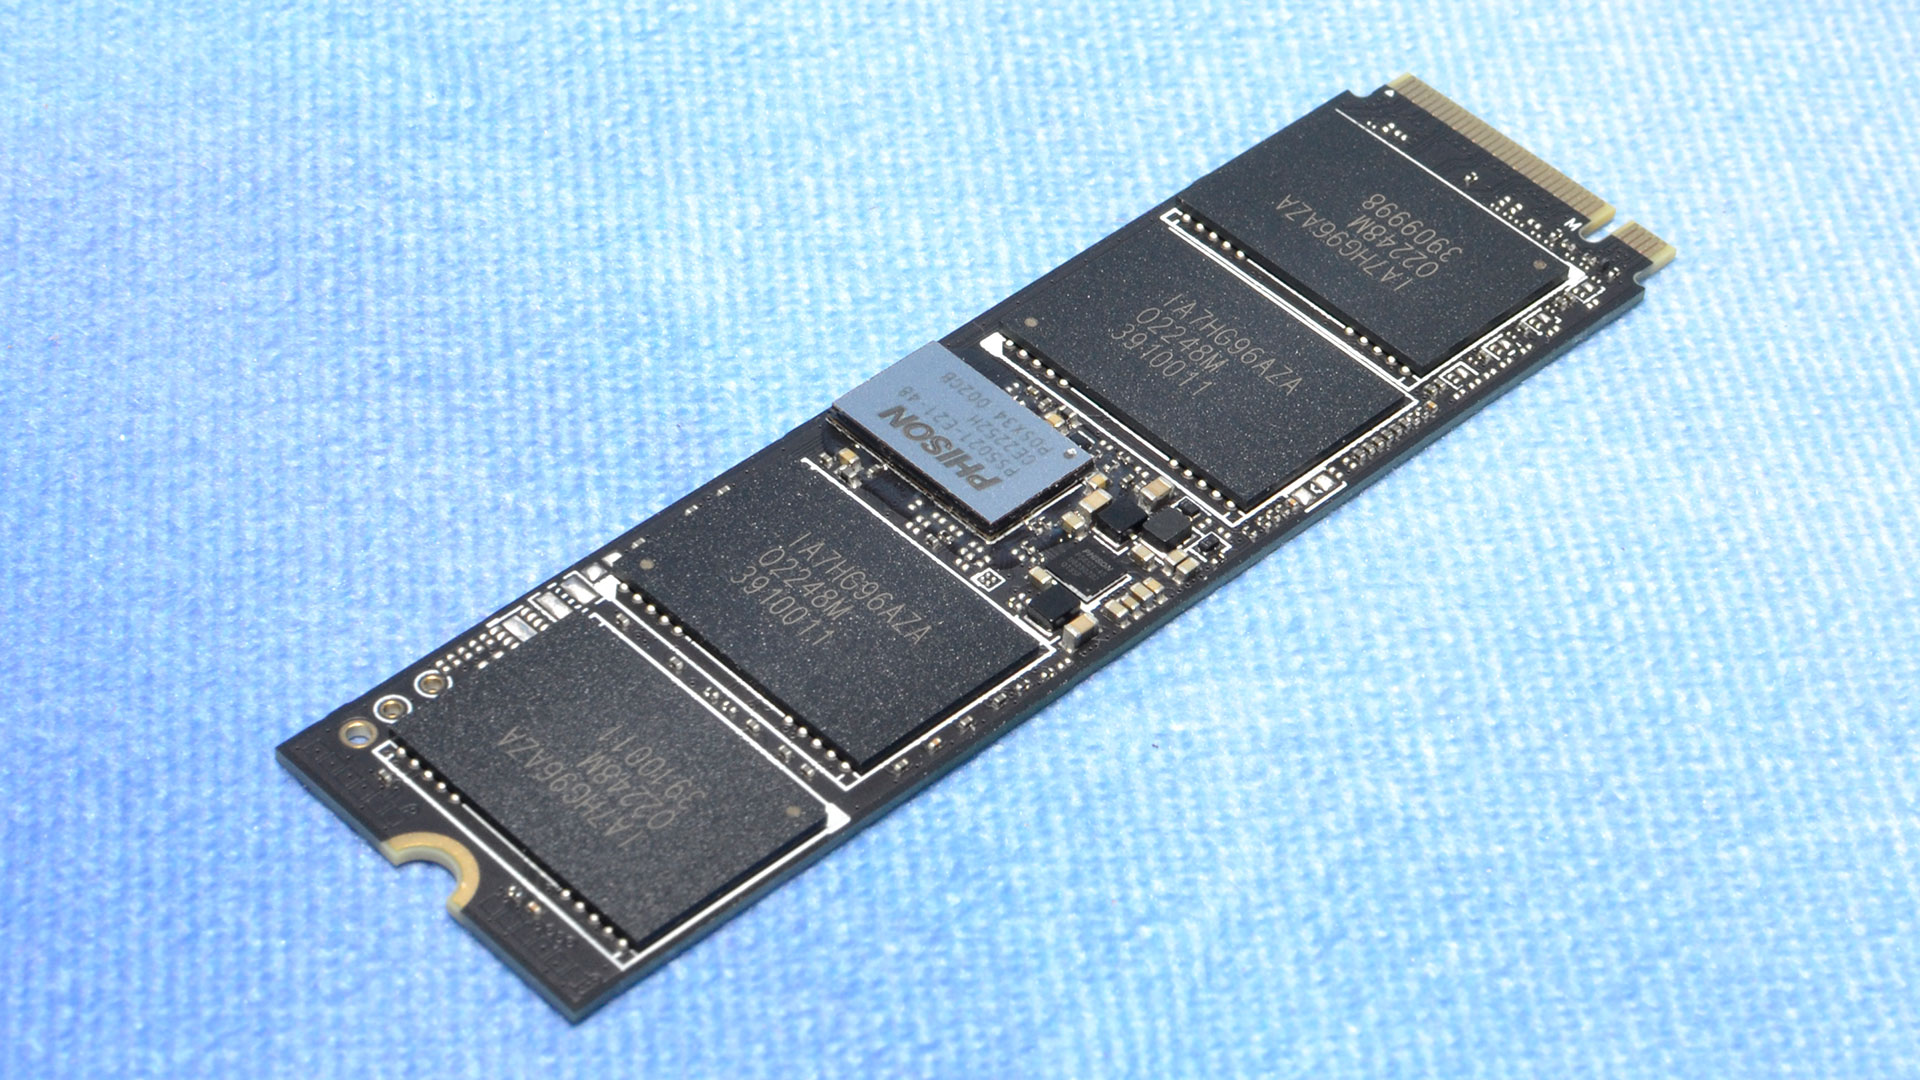 Corsair MP600 Core XT SSD